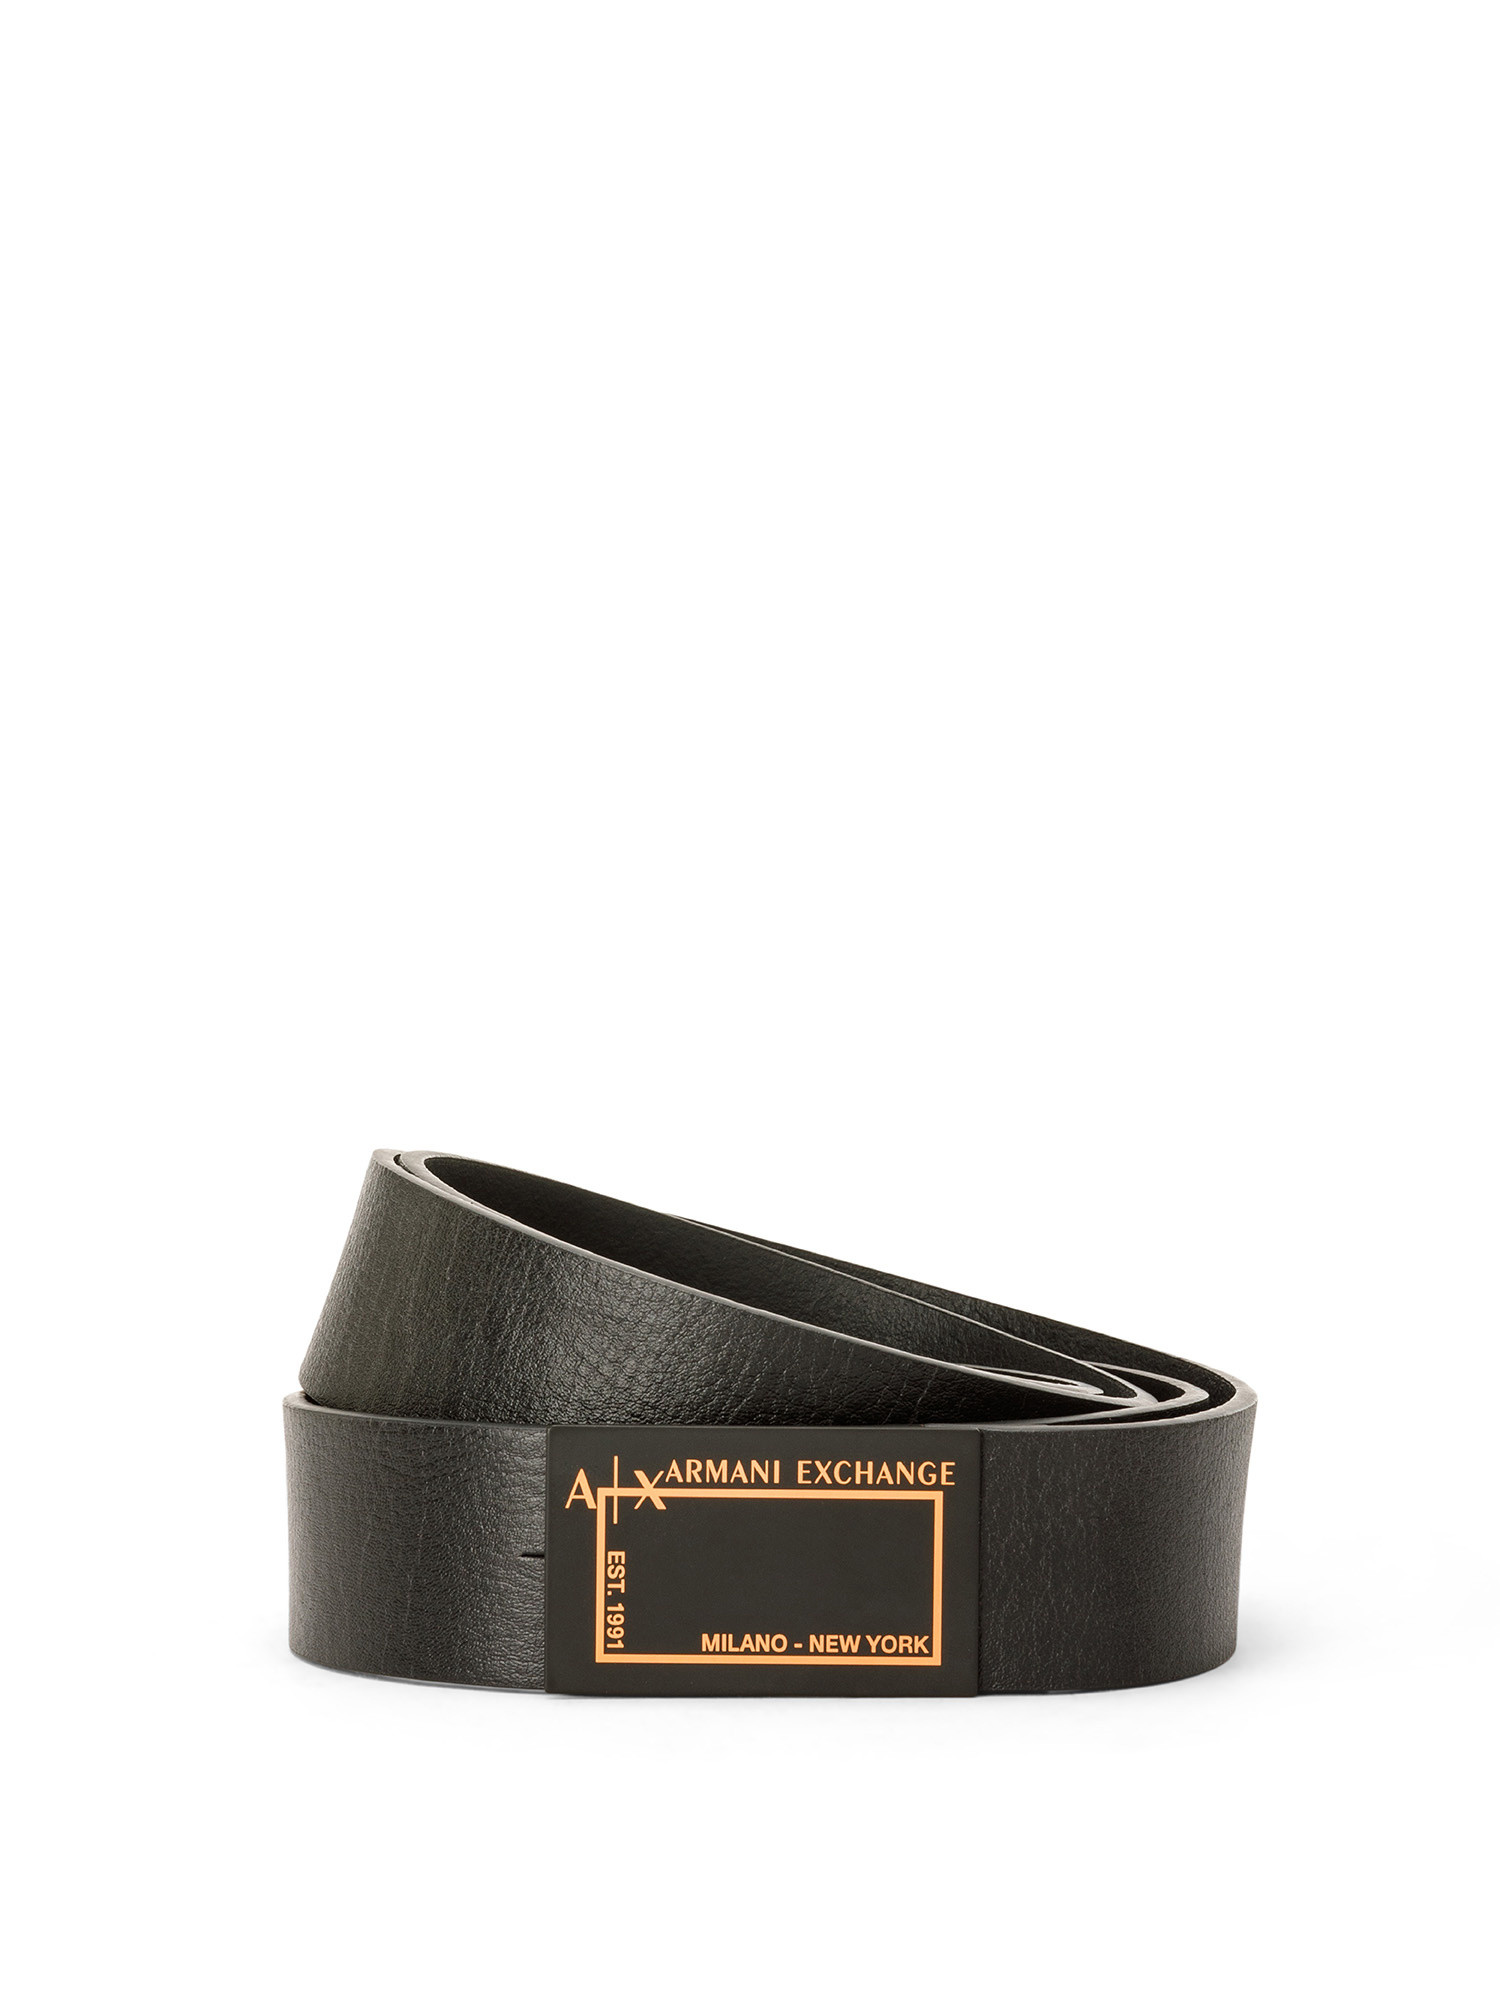 Armani Exchange - Leather belt with logoed buckle, Black, large image number 0